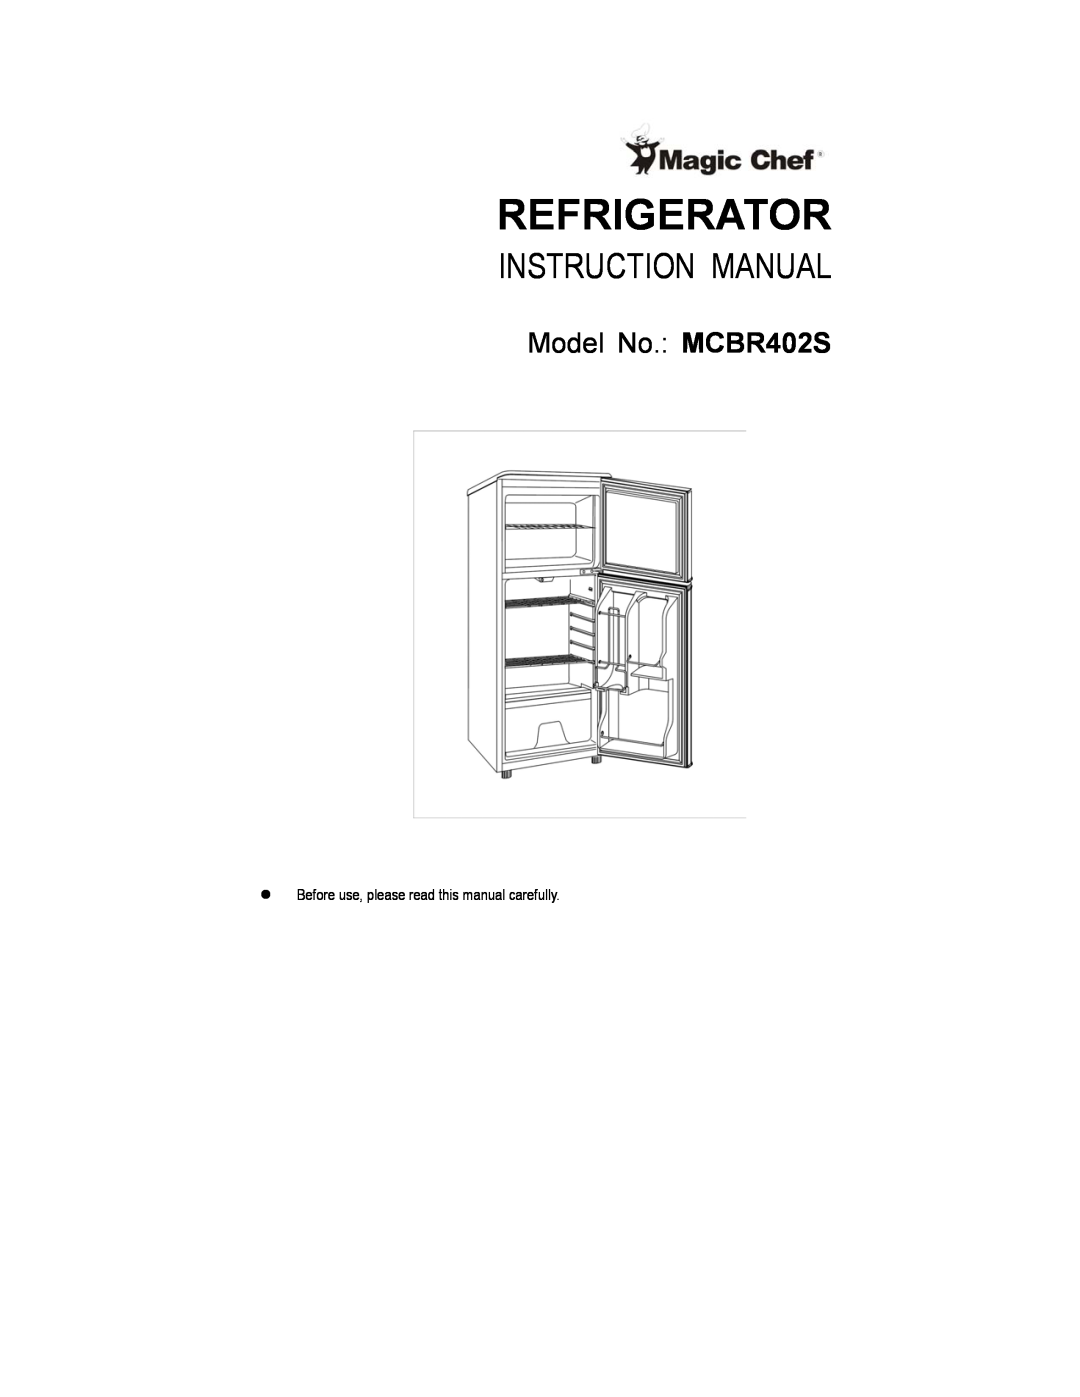 Magic Chef instruction manual Refrigerator, Instruction Manual, Model No.: MCBR402S 